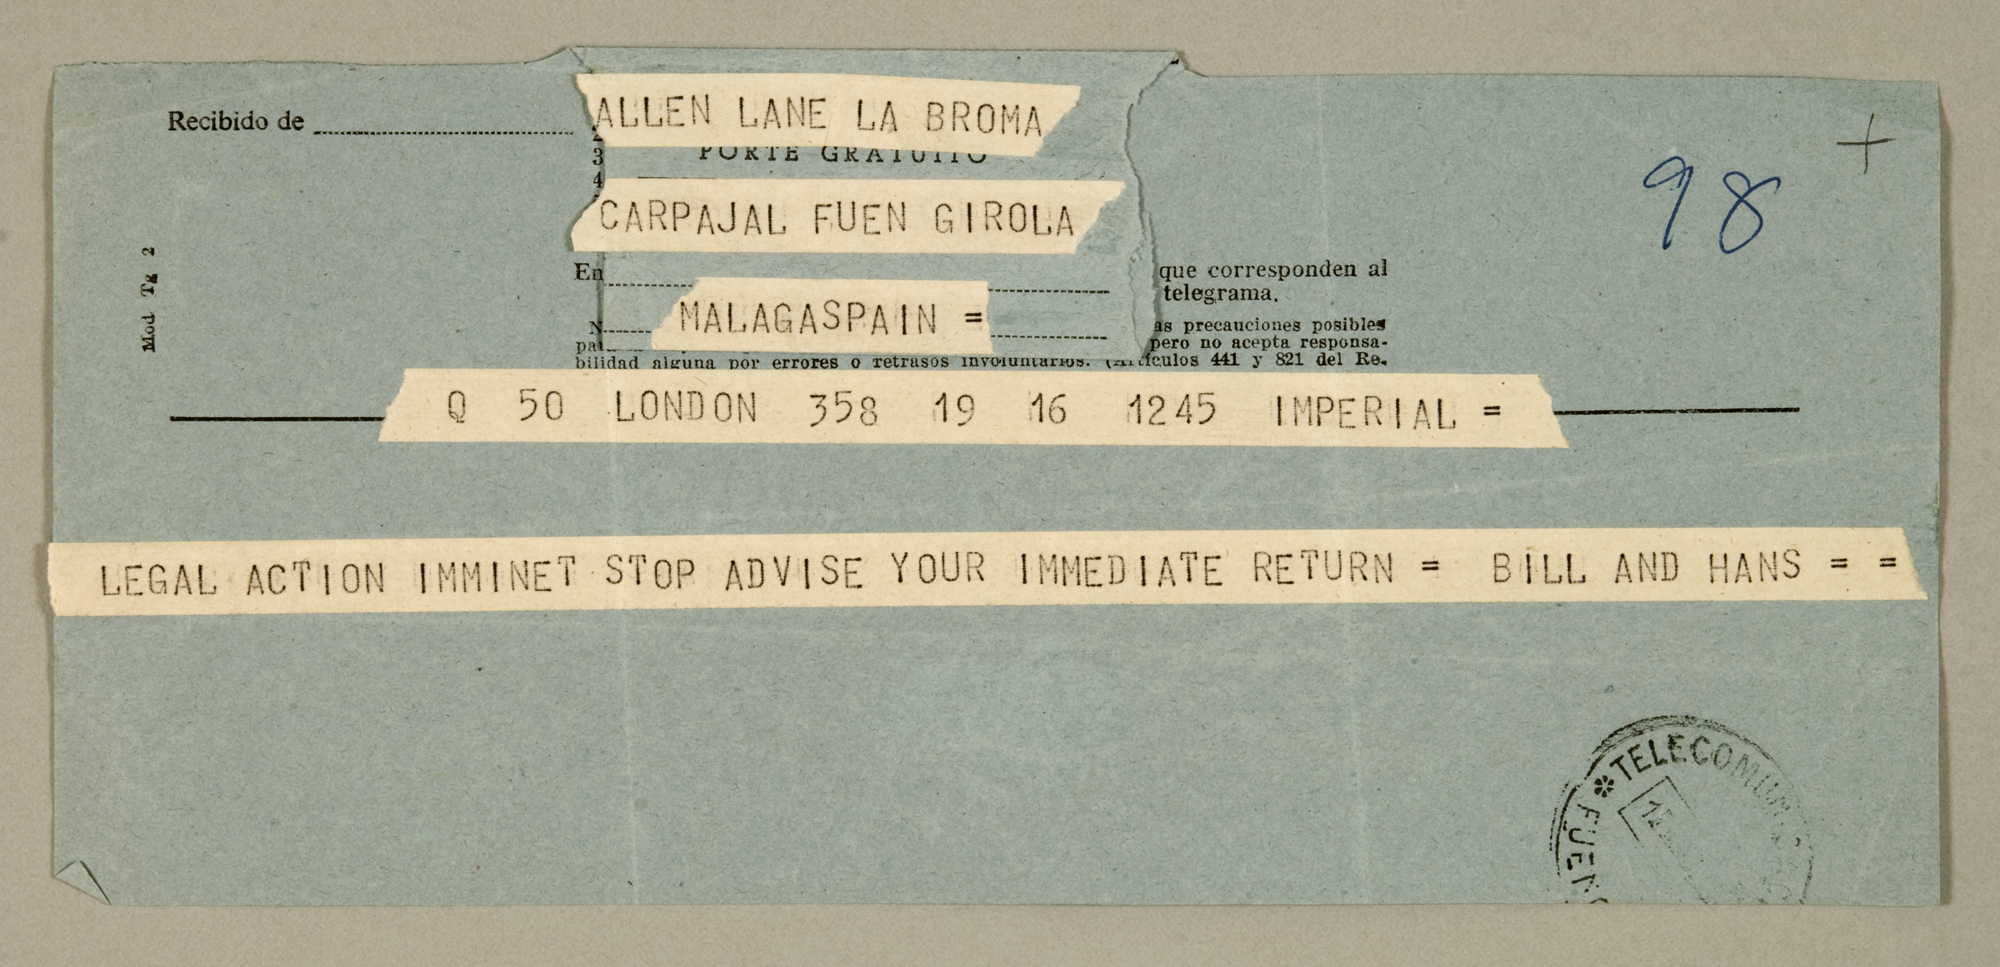 Telegram sent to Allen Lane 